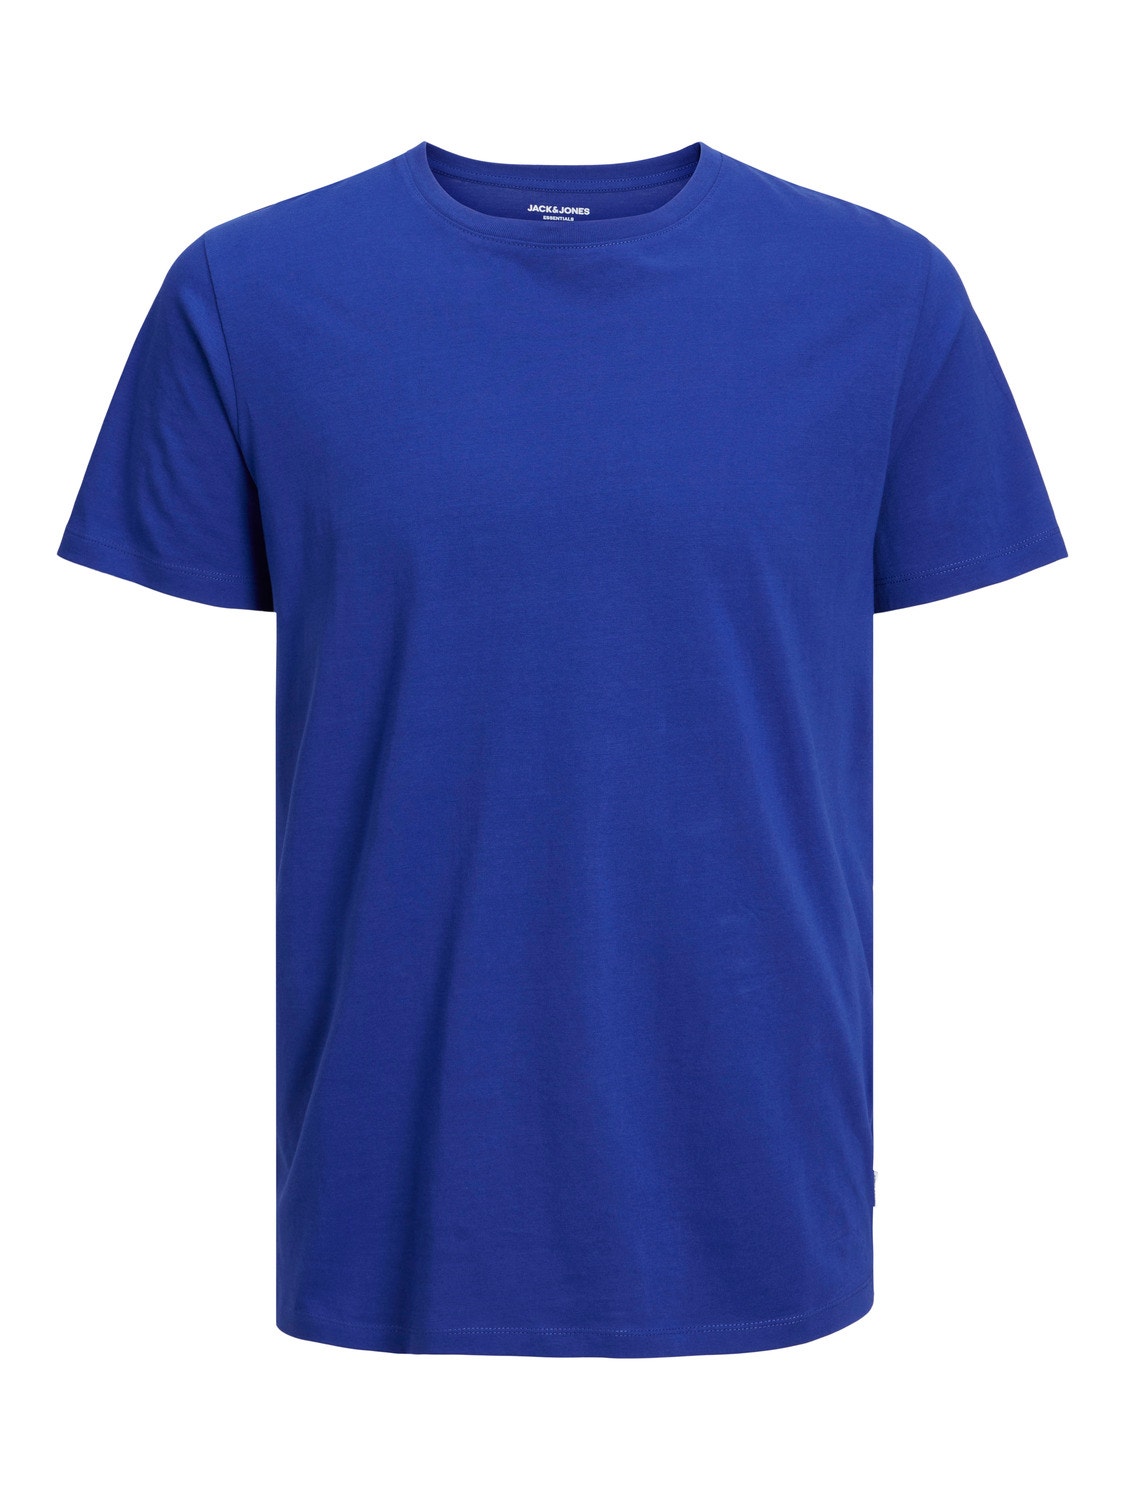 Jack & Jones Plain Crew neck T-shirt -Bluing - 12156101